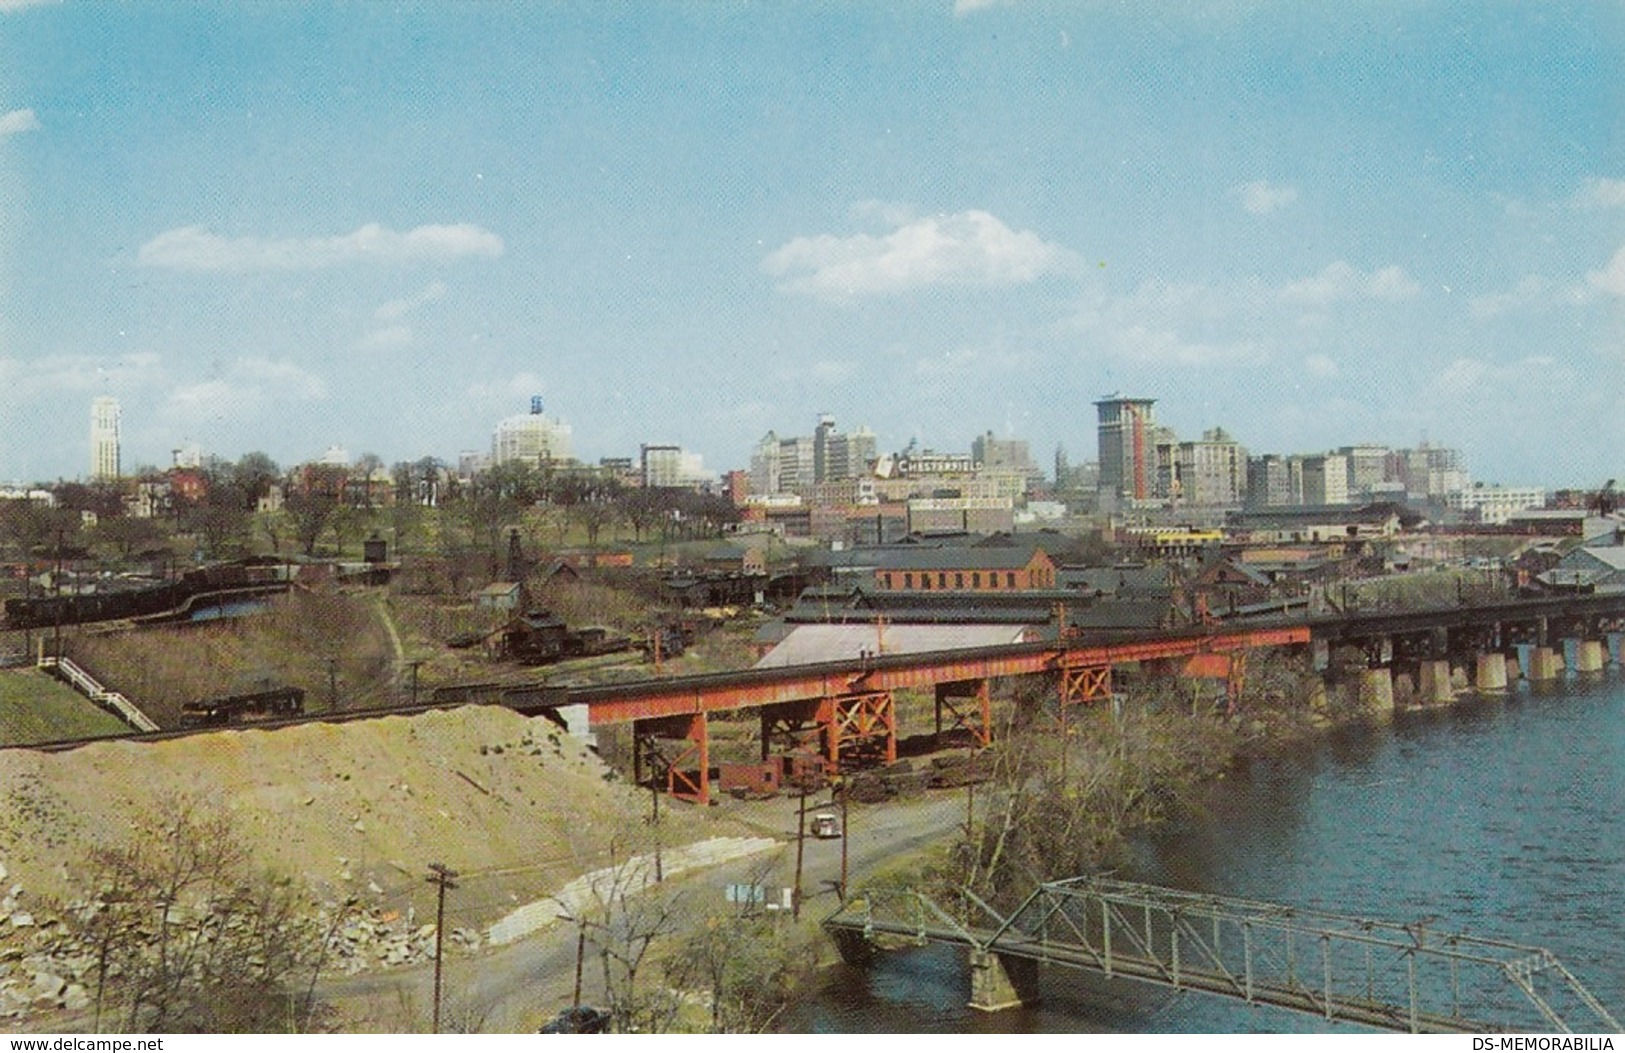 Richmond VA - Skyline As Seen From Lee Bridge Postcard - Richmond